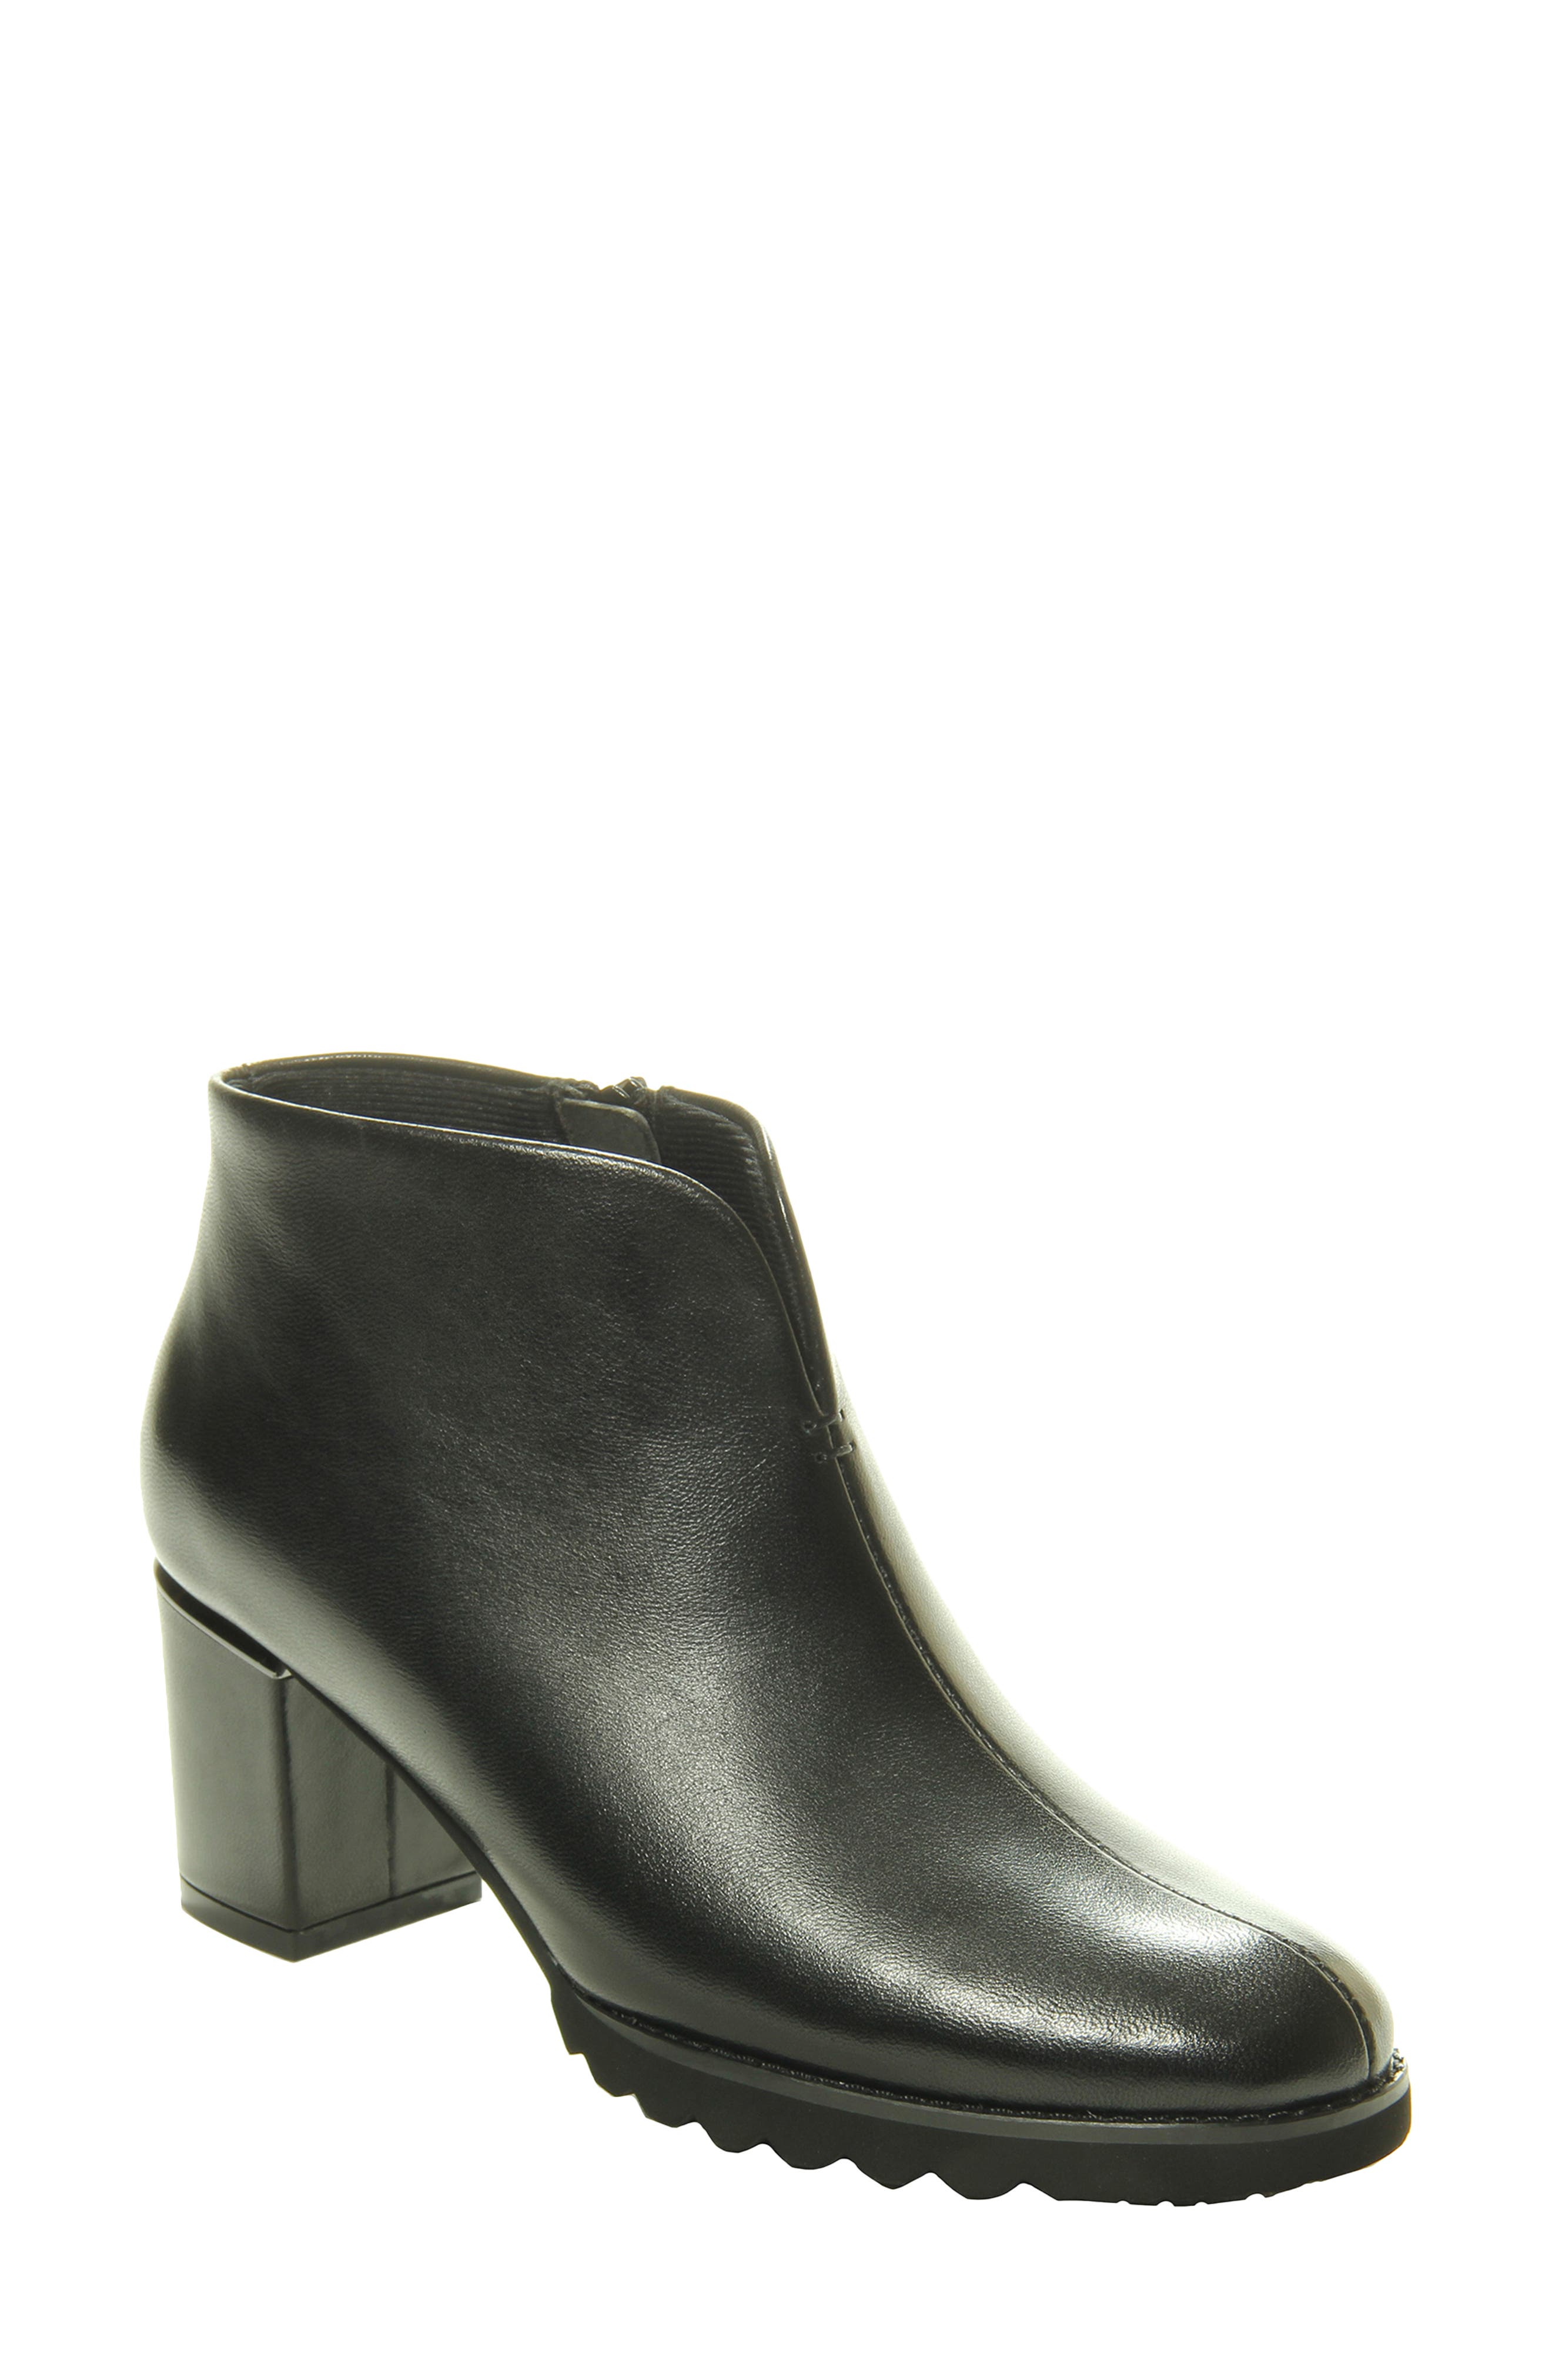 vaneli shoes official website